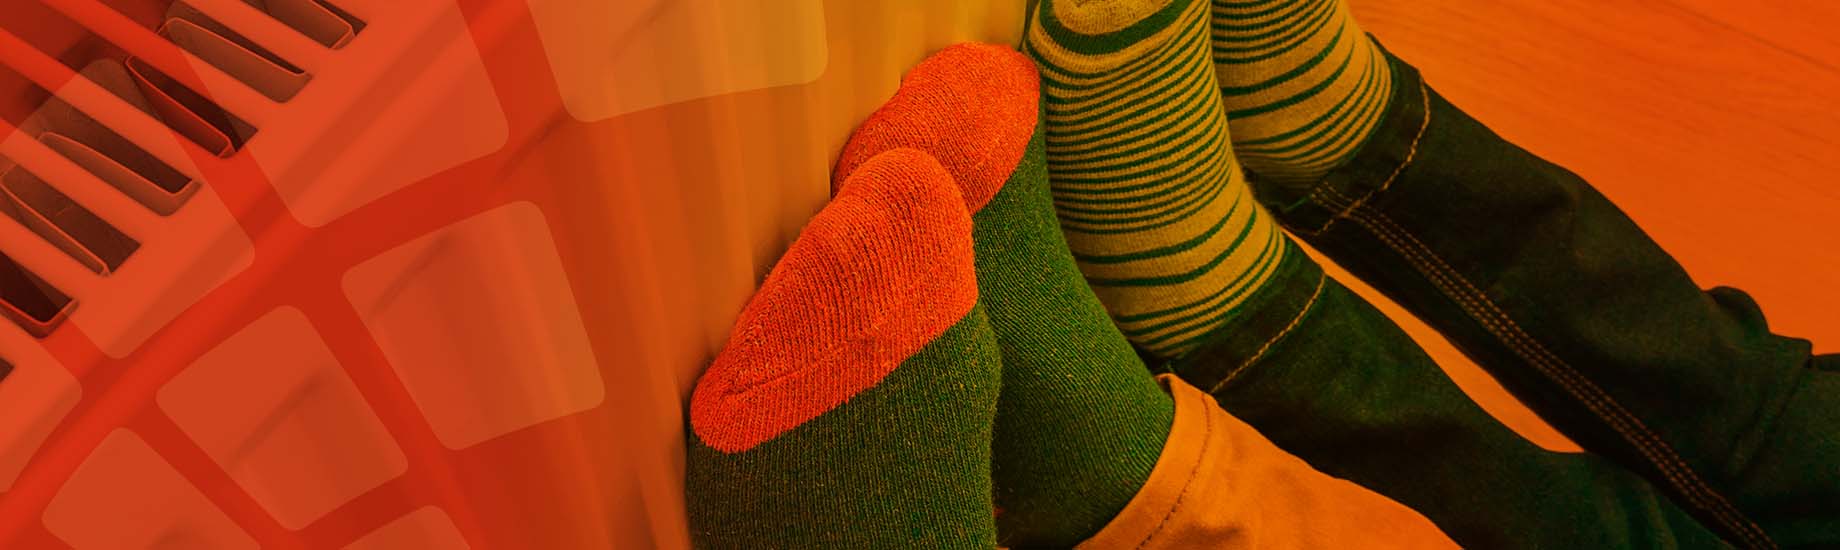 Feet in socks leaning on radiator